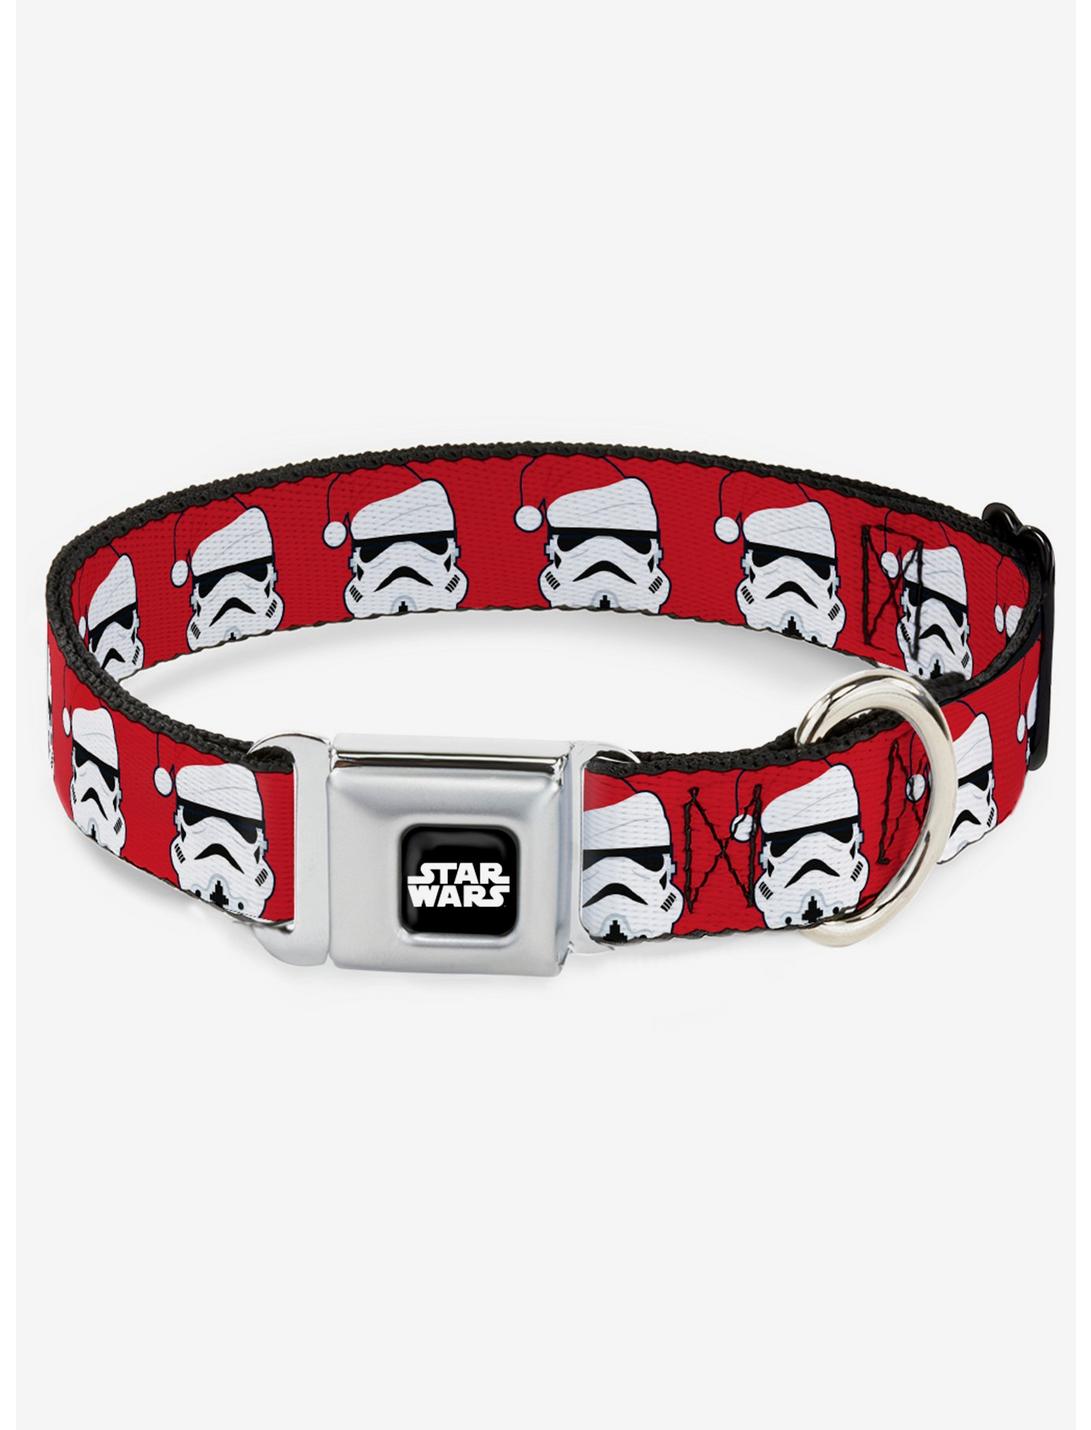 Star Wars Stormtrooper Santa Claus Seatbelt Dog Collar, RED, hi-res